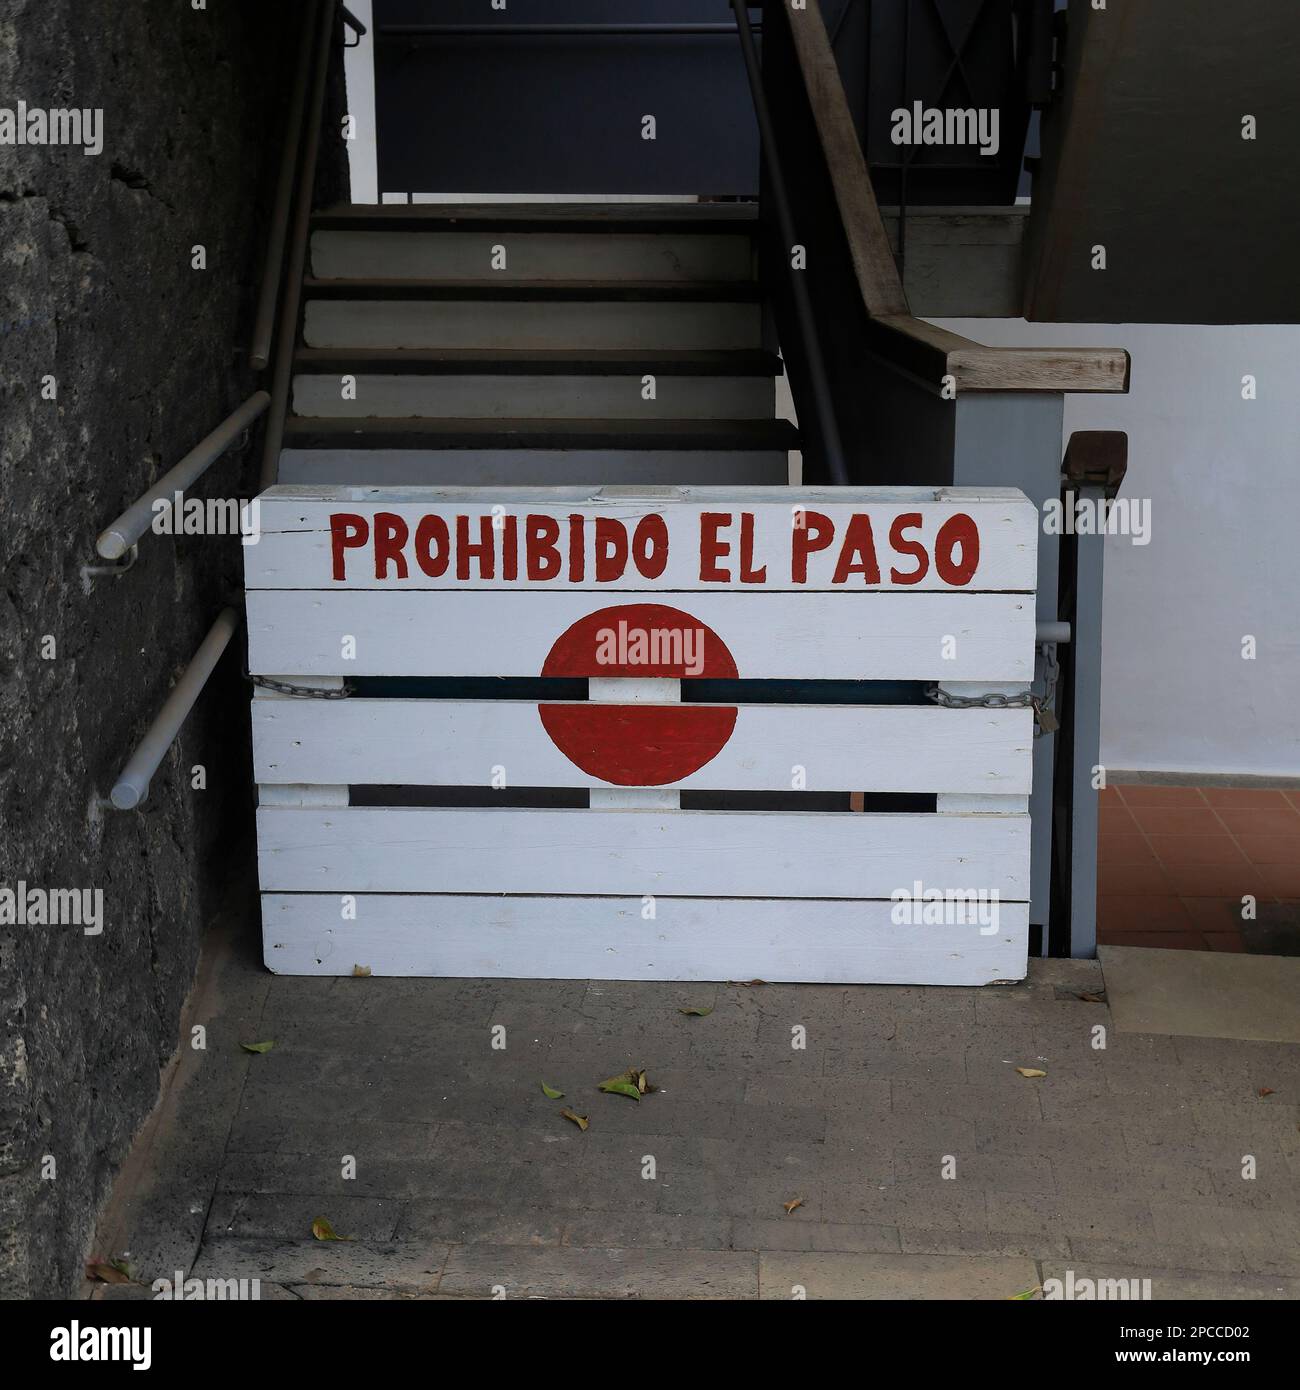 No entry - Prohibido el paso sign and barrier, Lanzarote, Canary Islands. Taken March 2023. Stock Photo